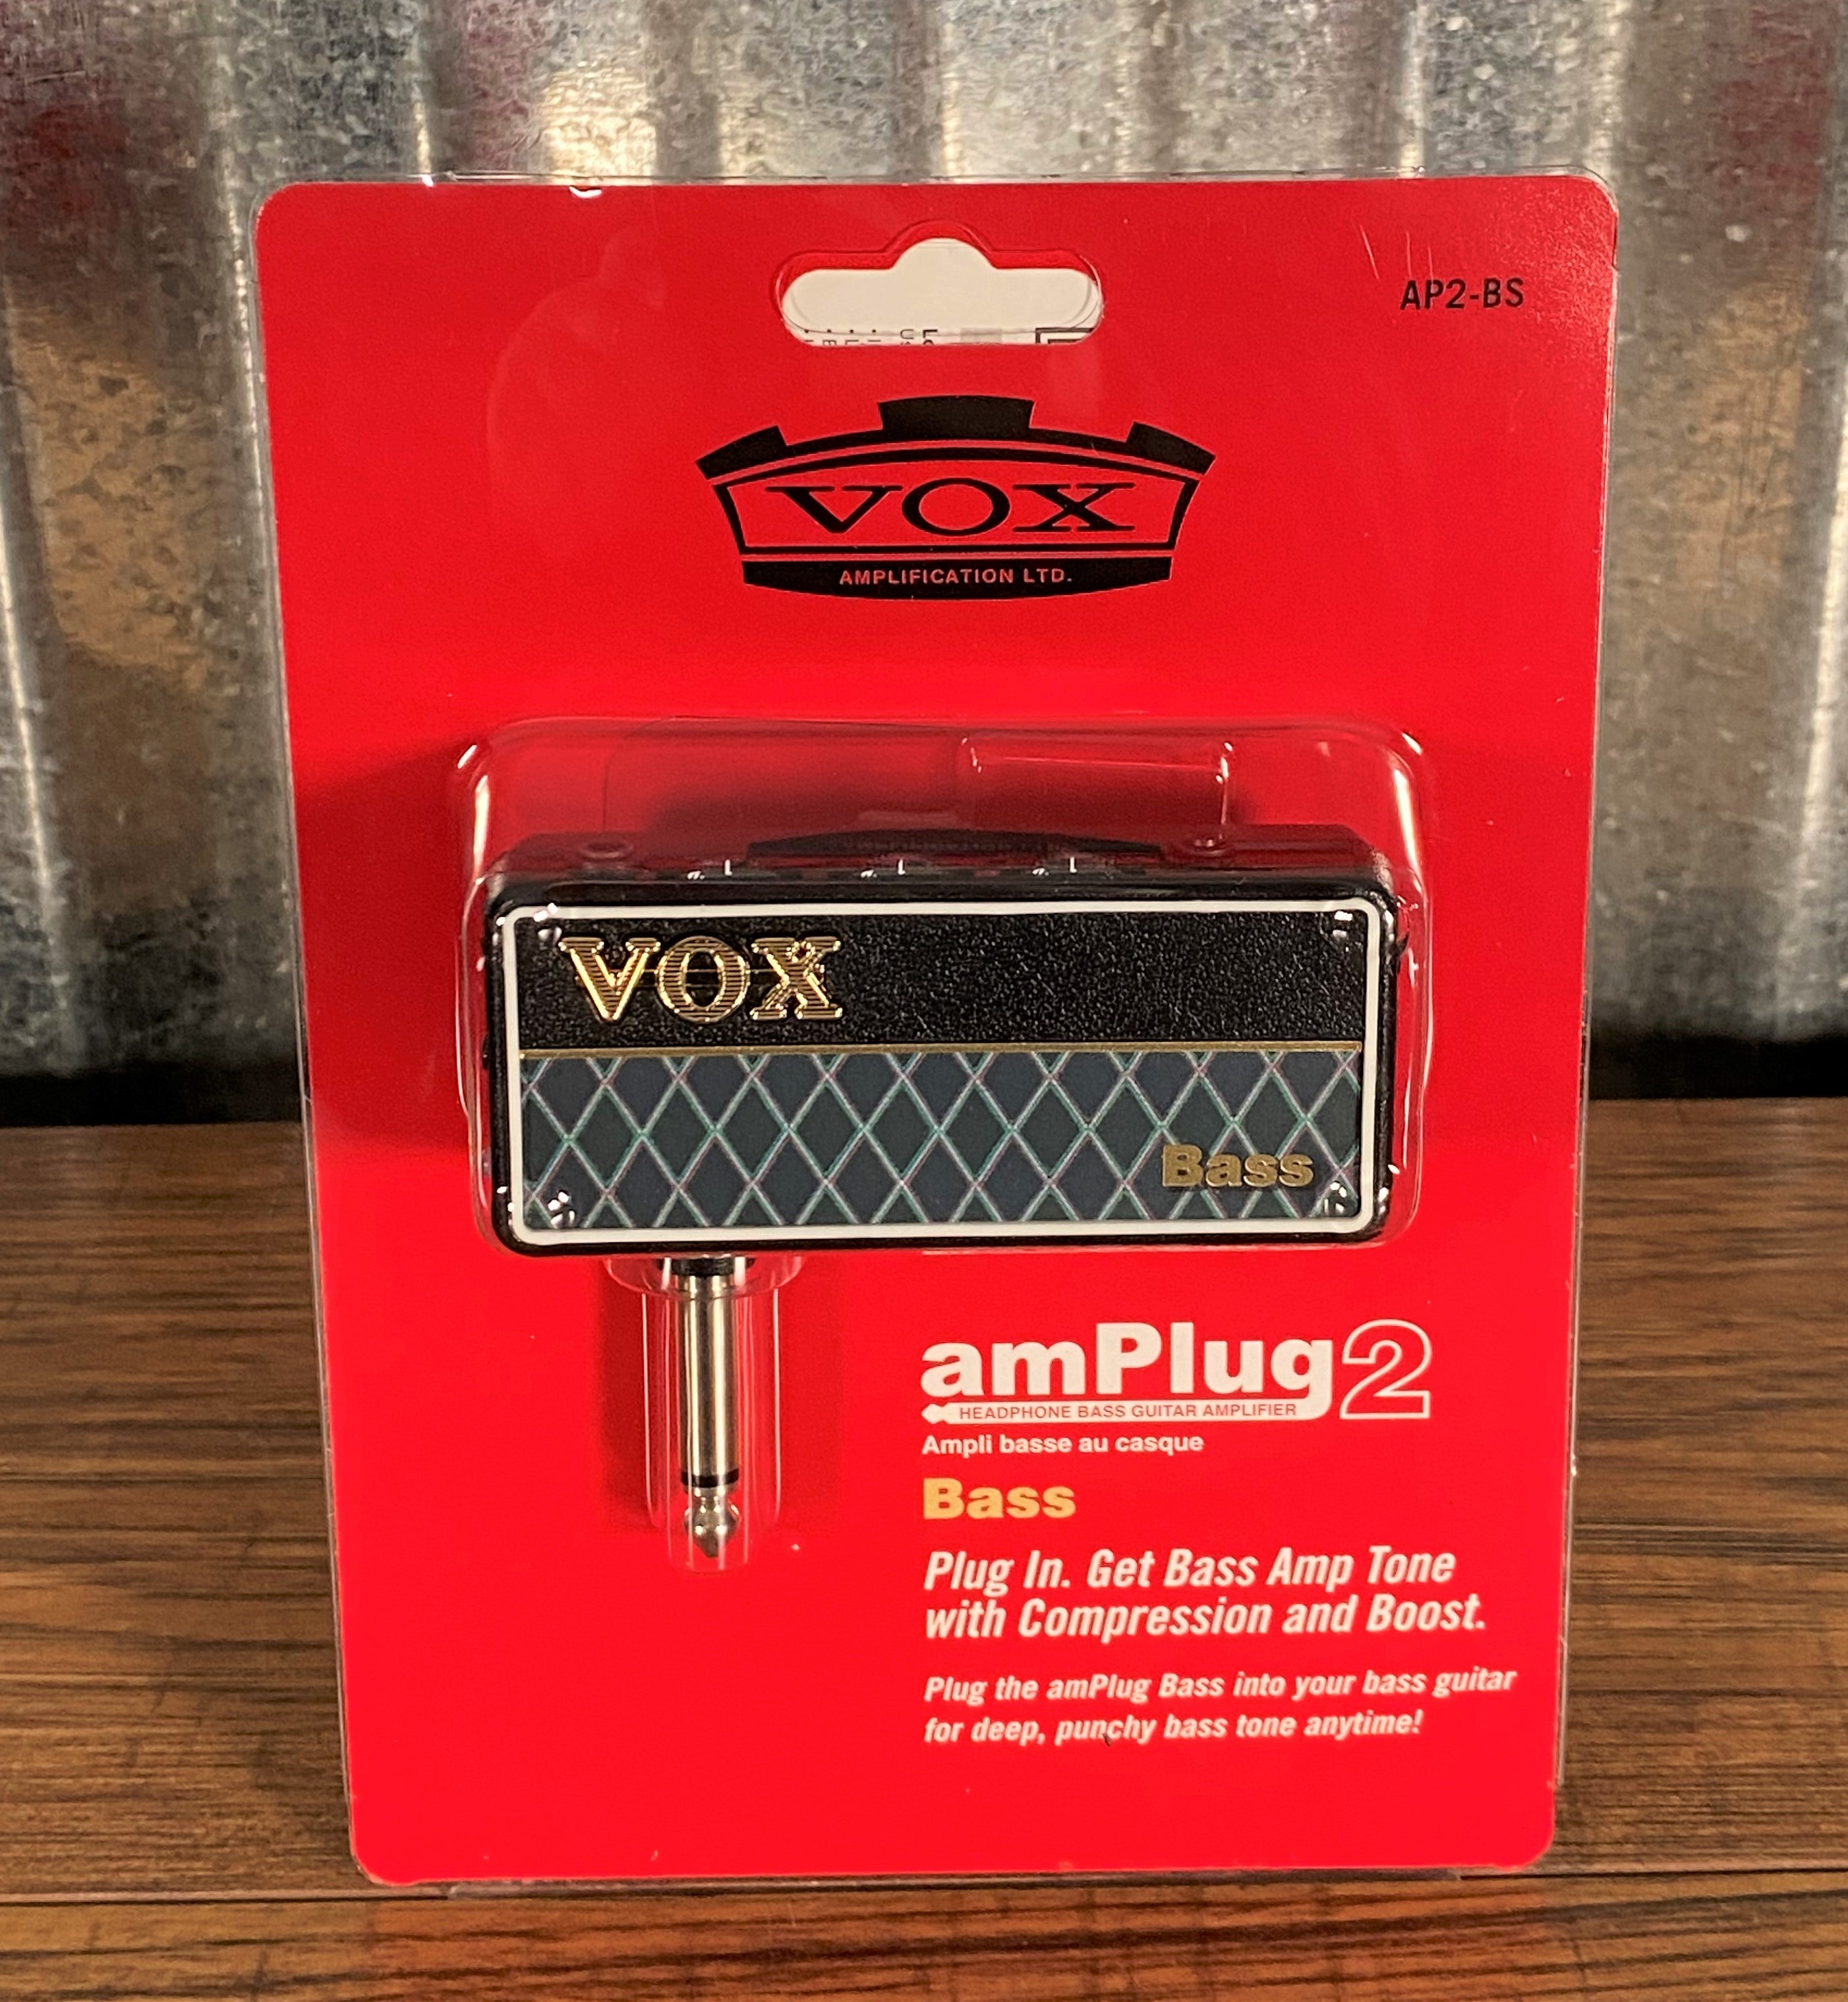 Plug Amp Ampli casque guitare - instruments-ampli